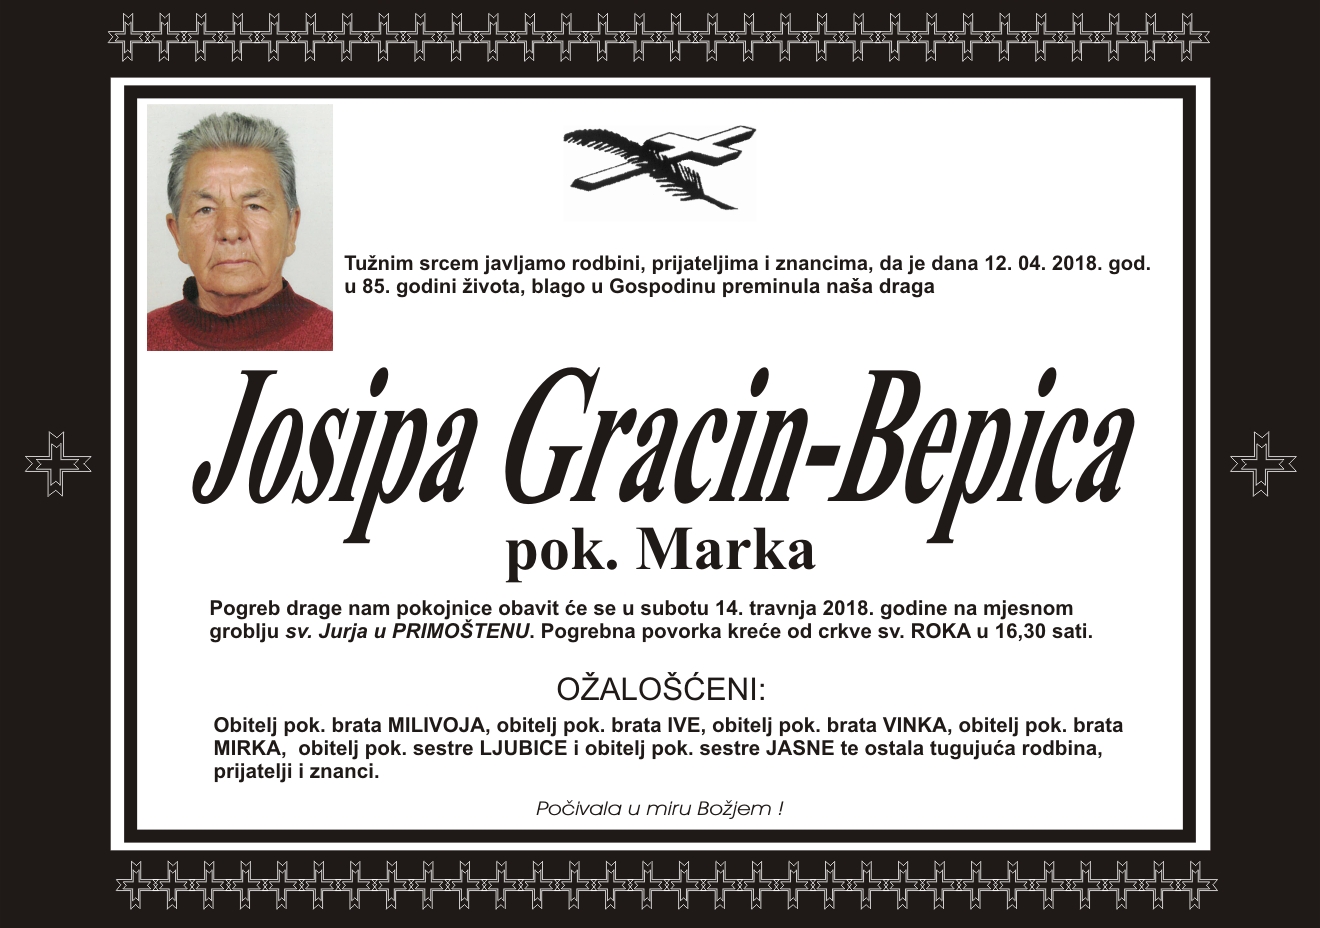 Umrla Josipa Gracin - Bepica